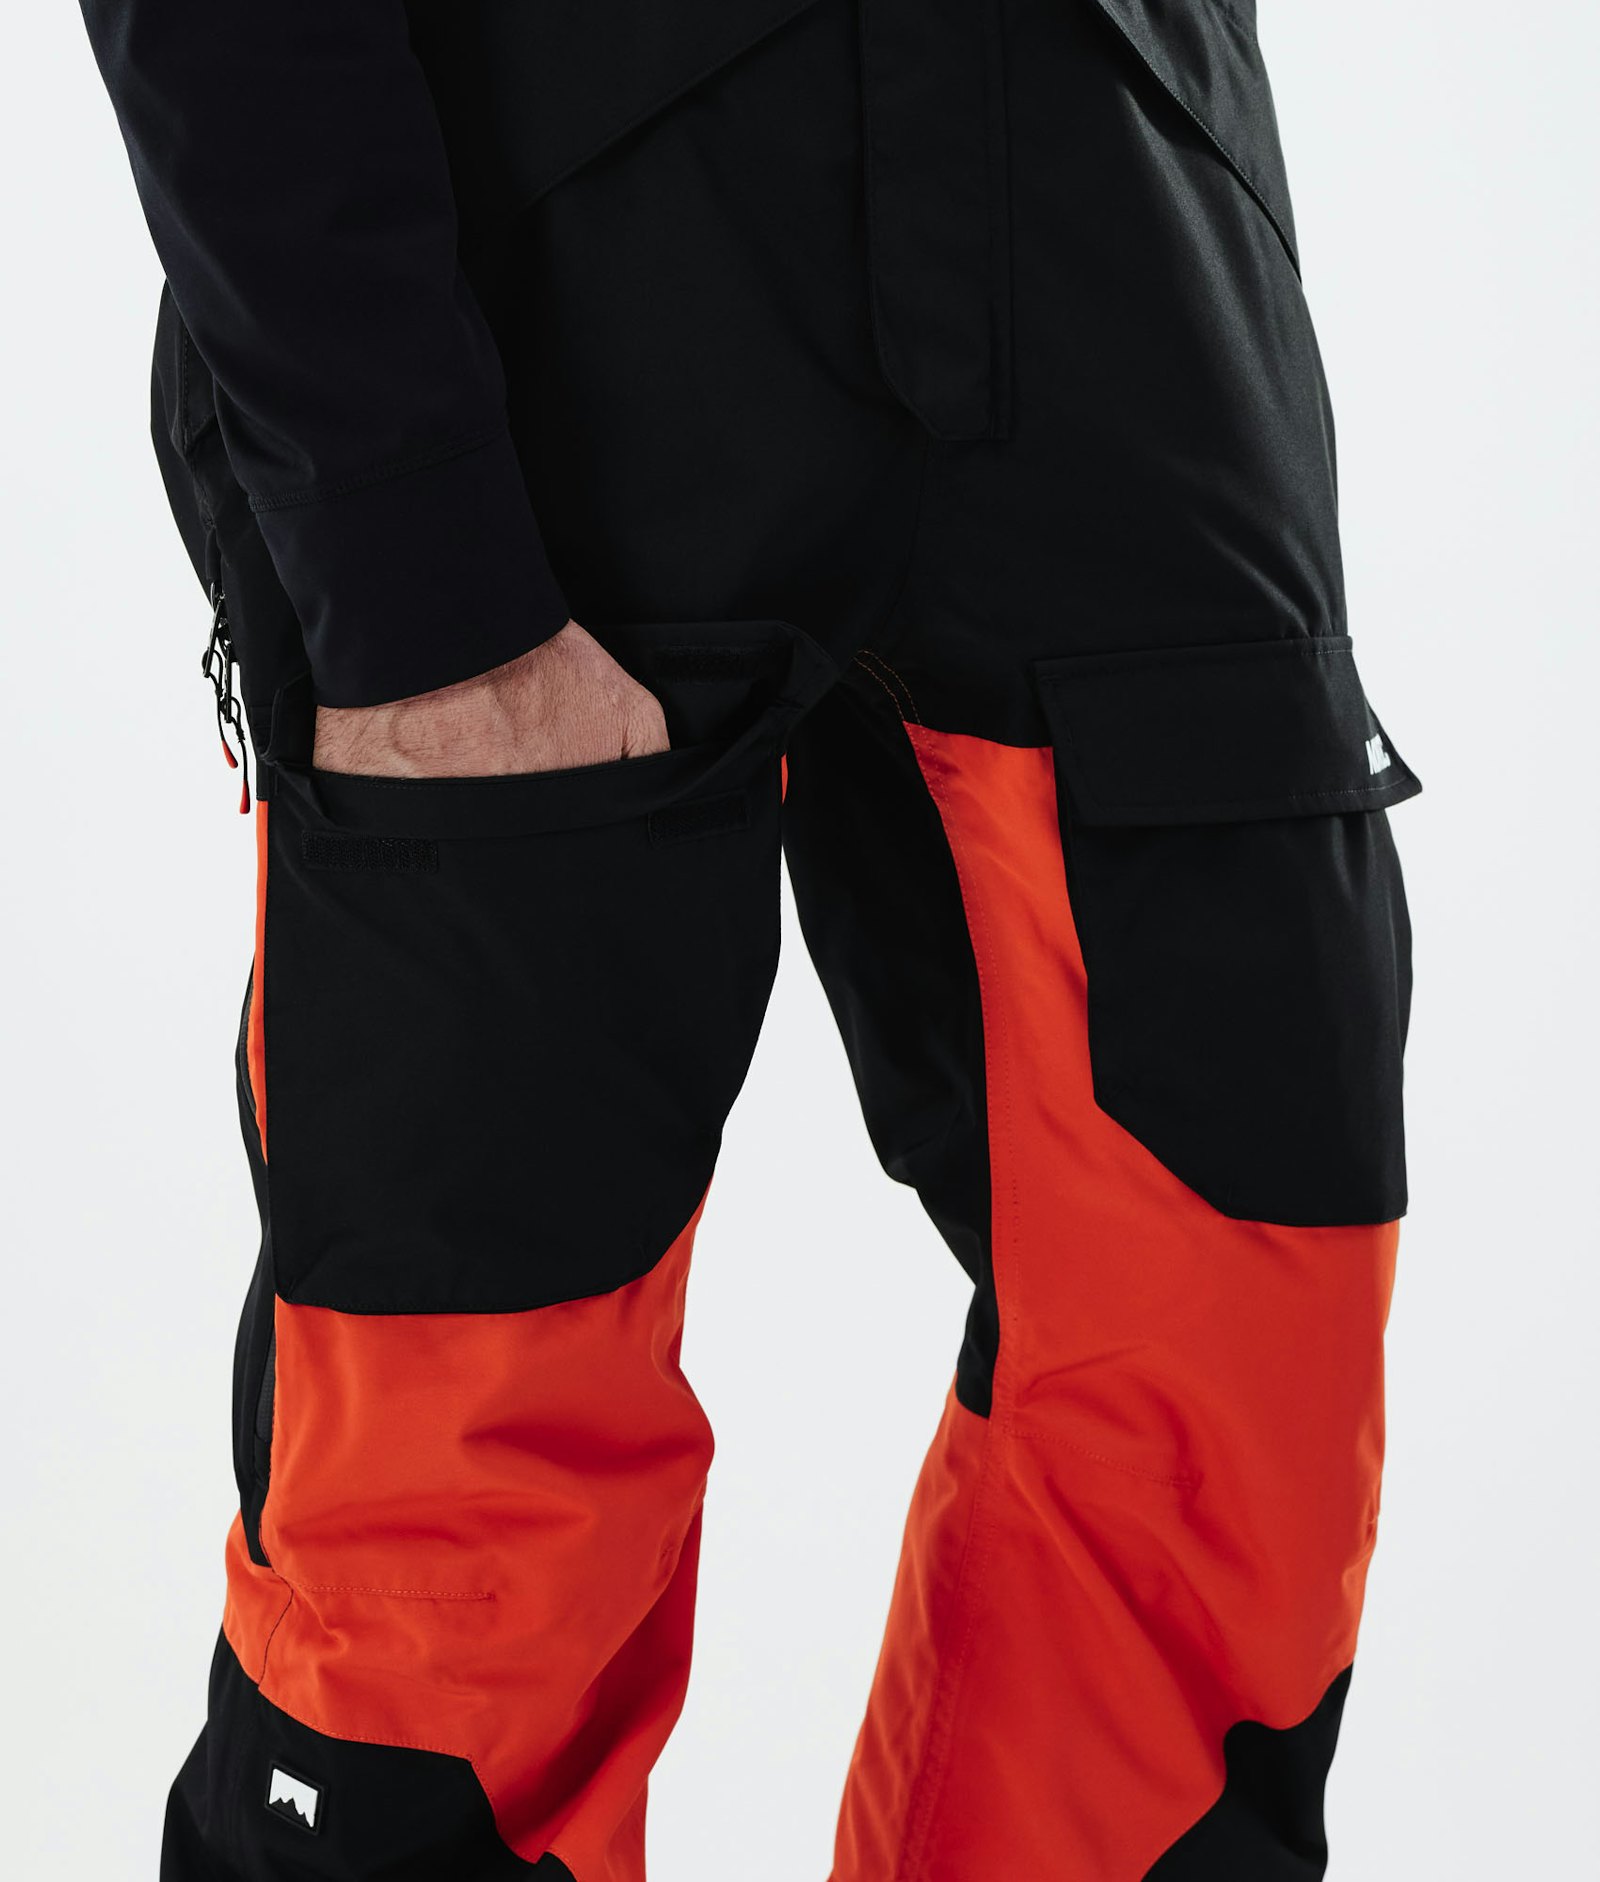 Fawk 2021 Snowboardhose Herren Black/Orange